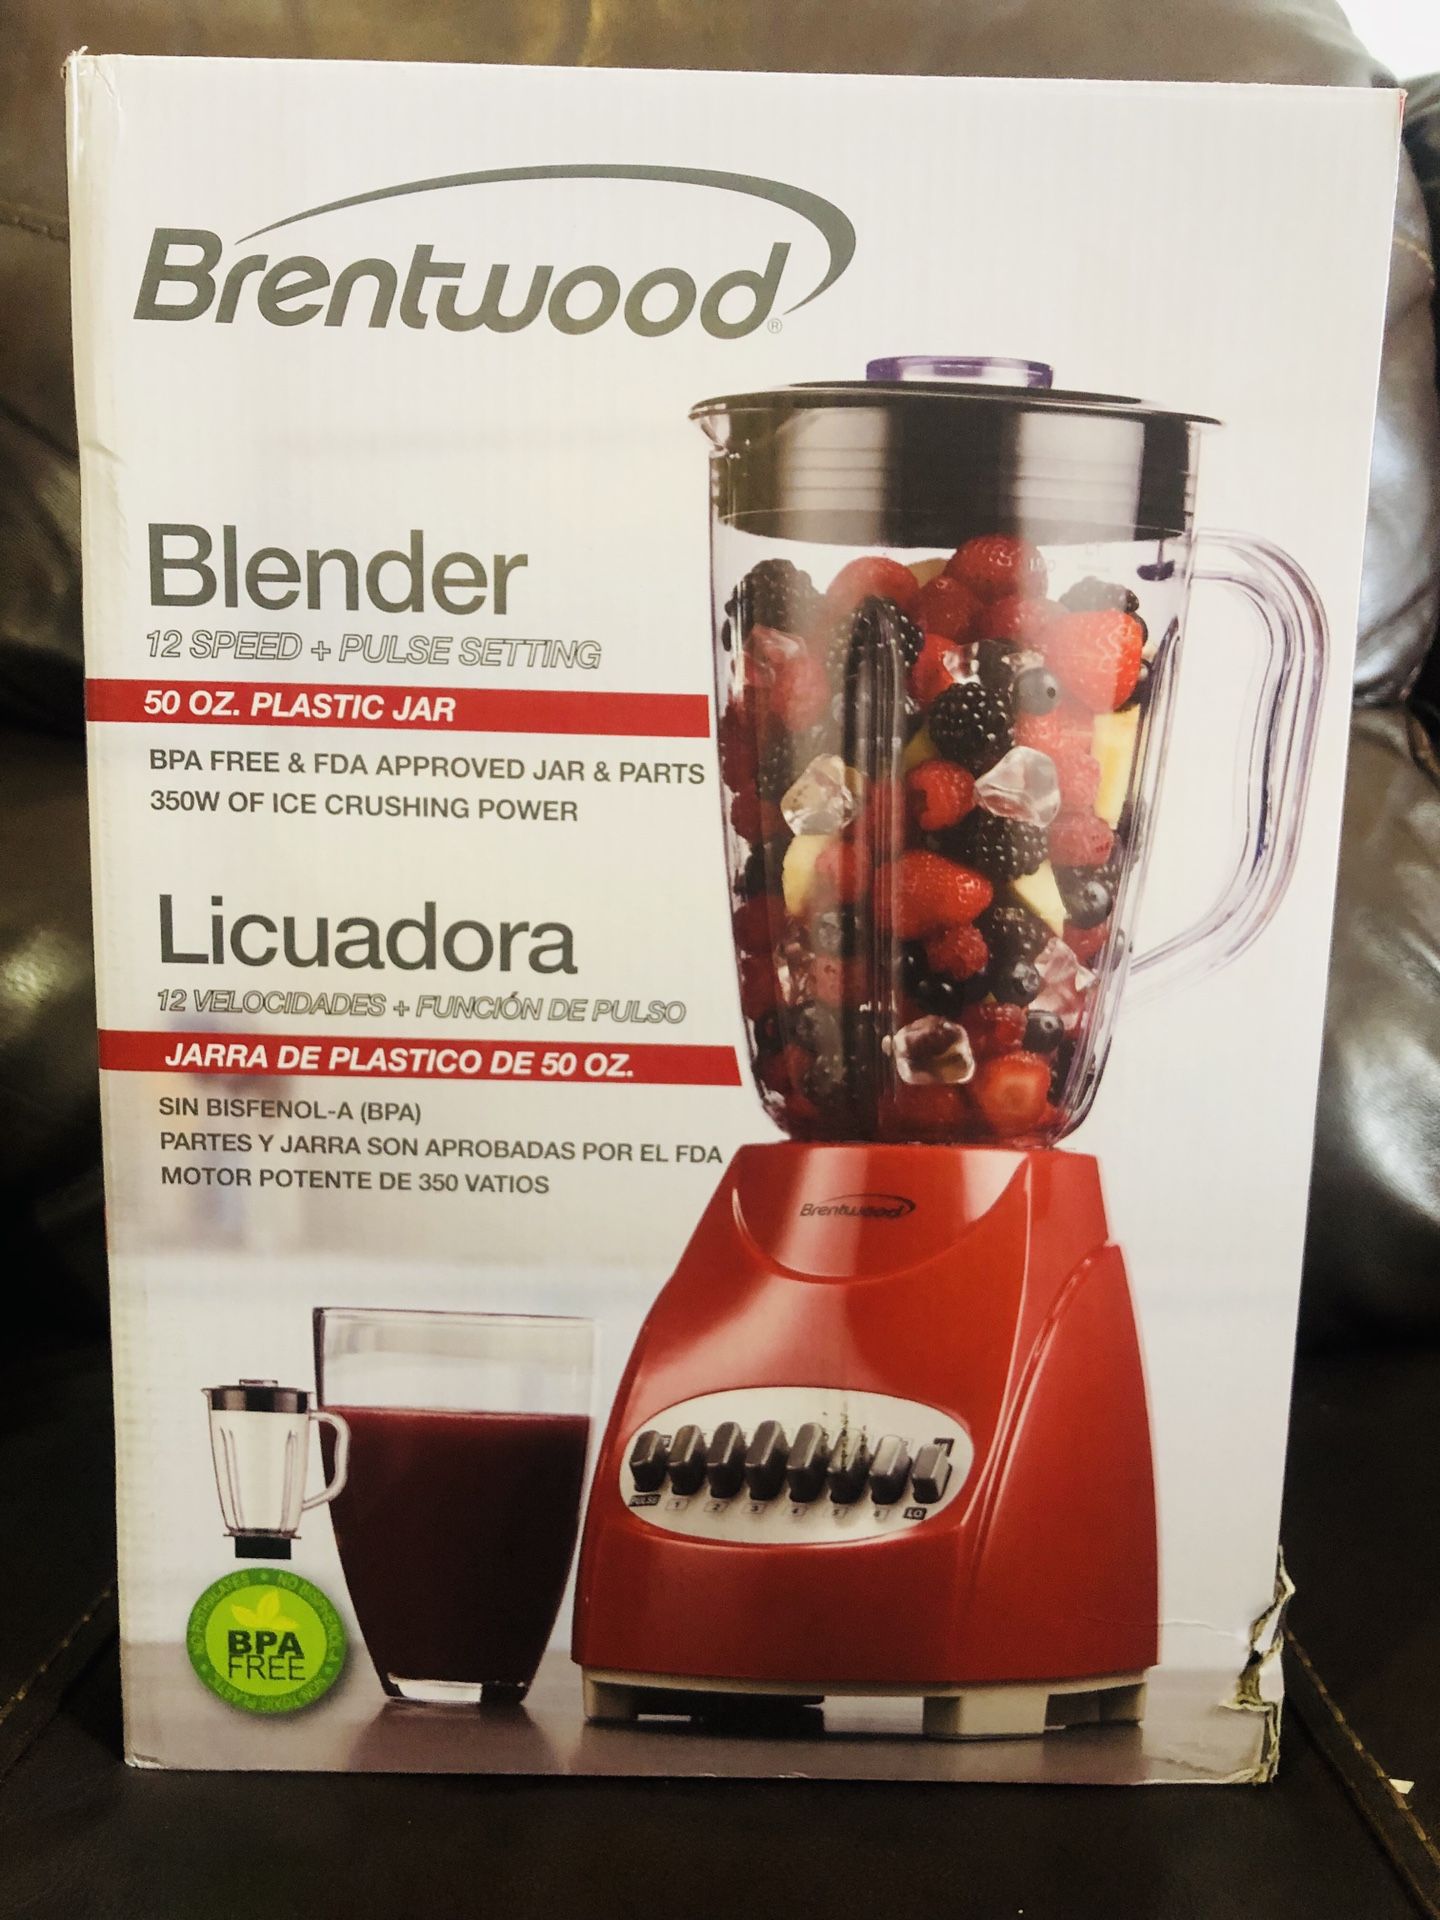 Brentwood licuadora 50 oz new, Blender 12 speeds